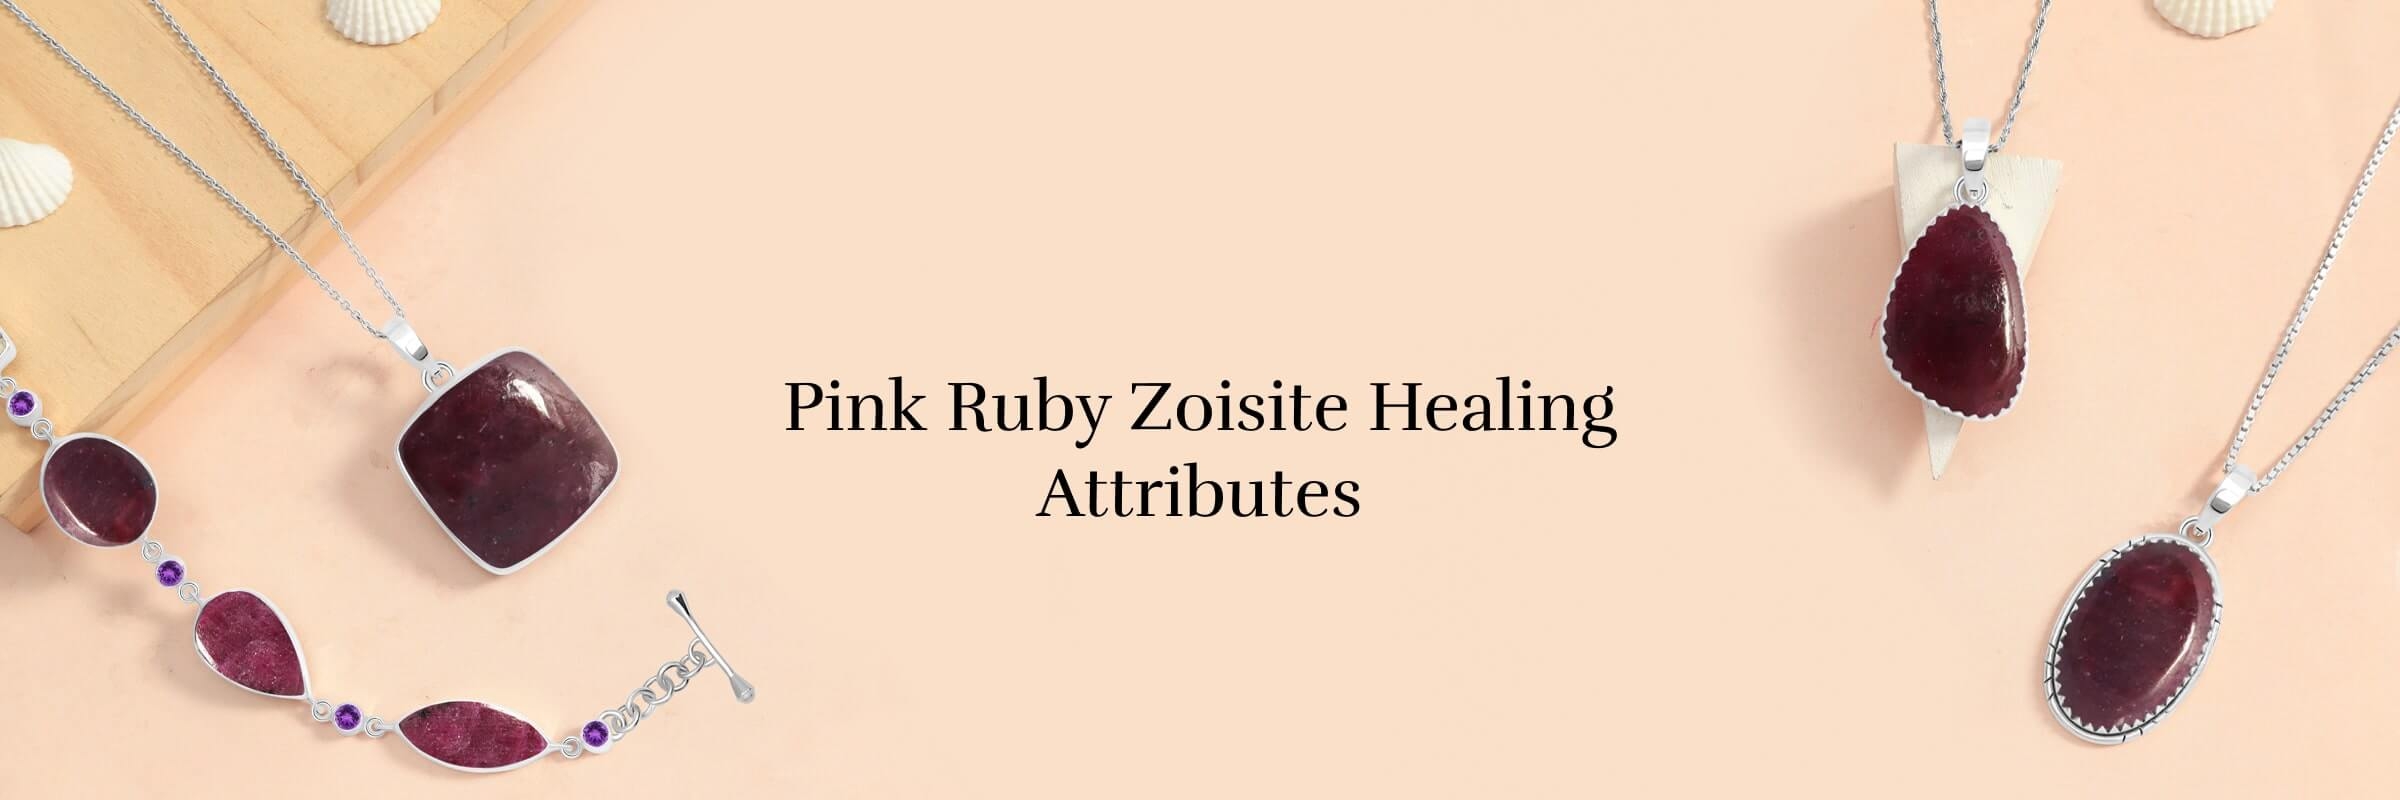 Pink Ruby Zoisite Healing Properties